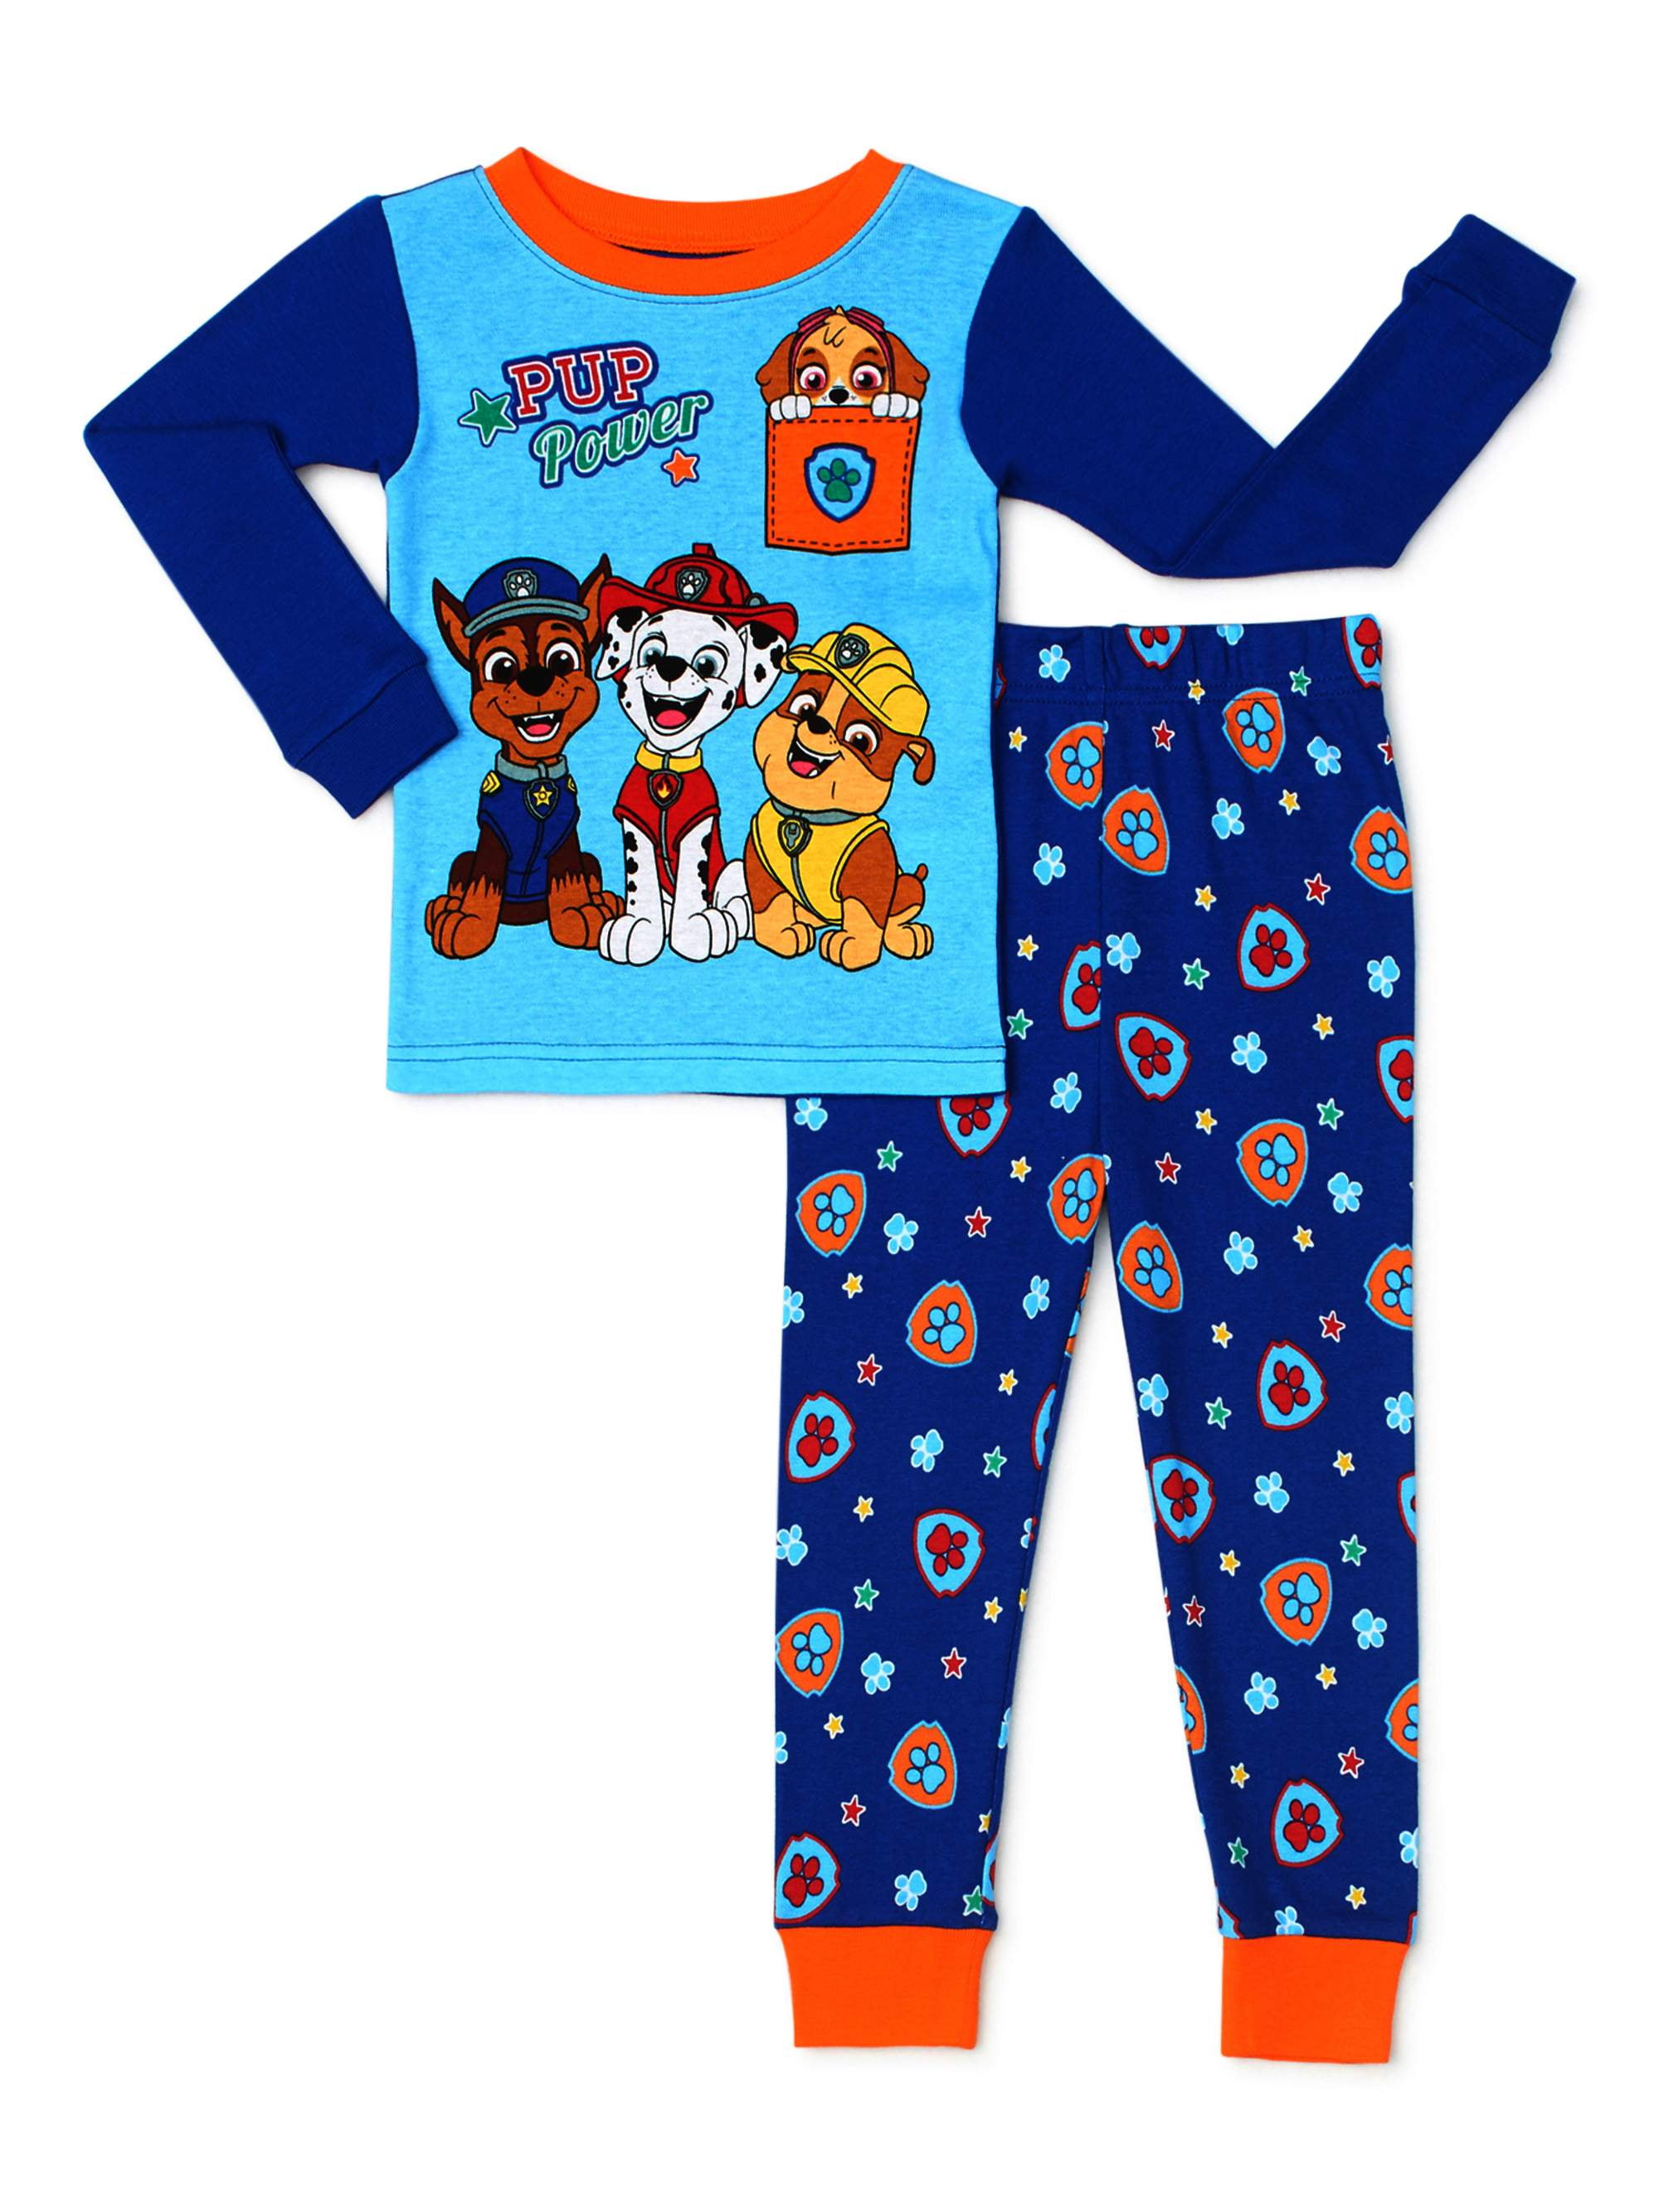 Paw Patrol Toddler Boys Snug Fit Cotton Long Sleeve Pajamas in Blue, 2pc - Walmart.com